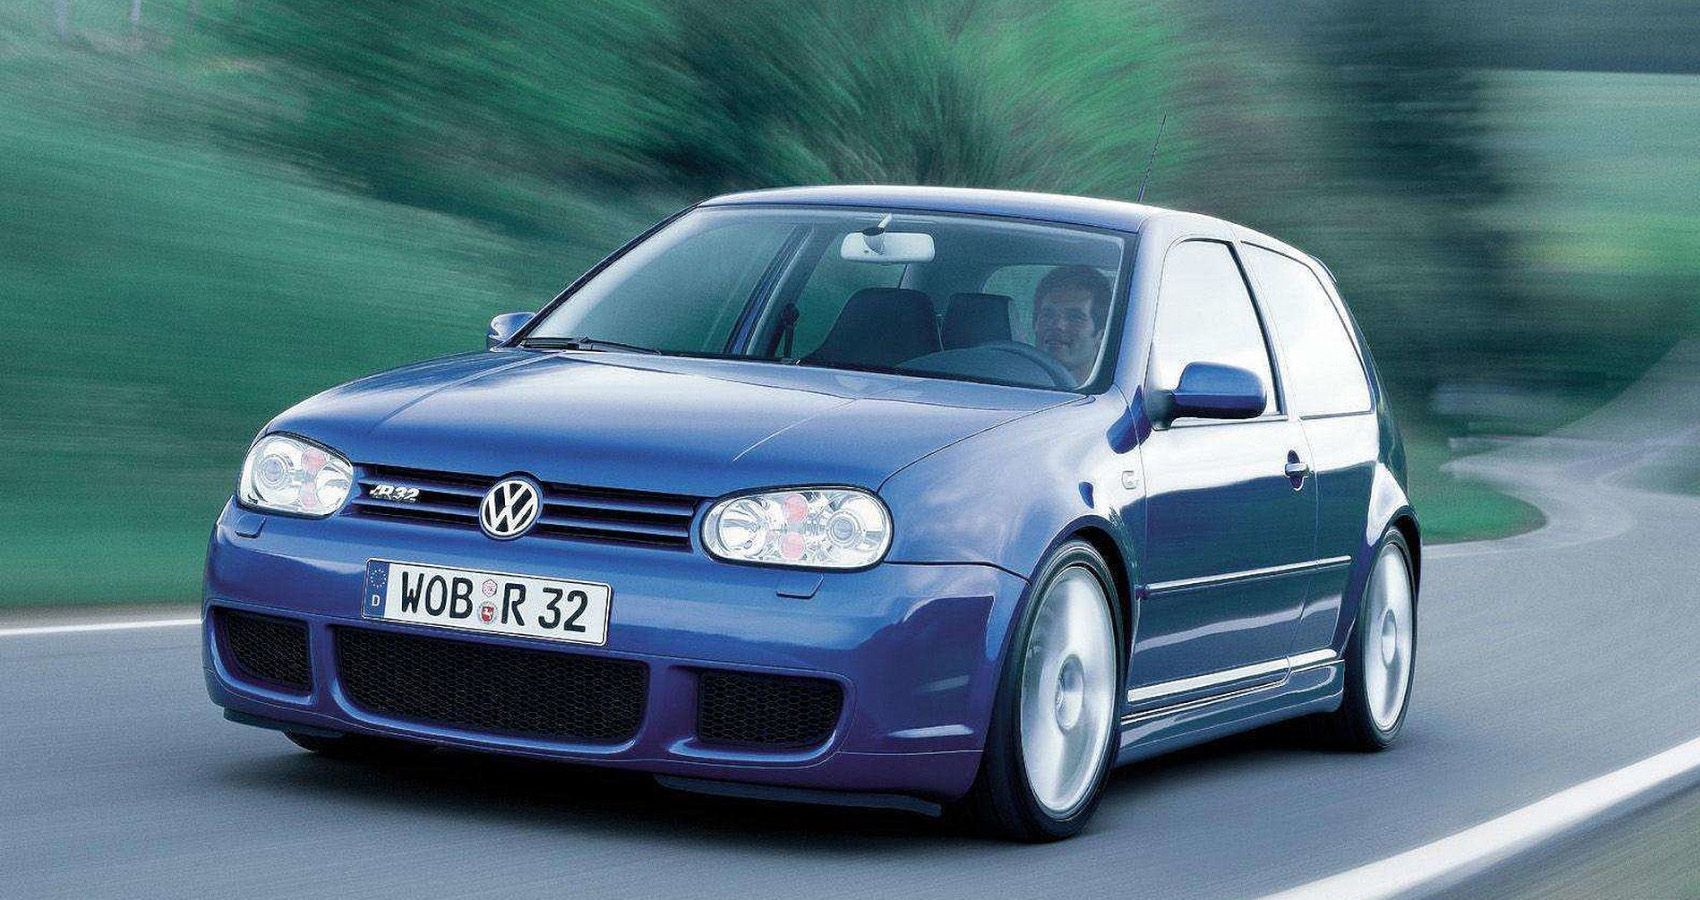 Here's How The Legendary Mark IV Volkswagen Golf And Jetta